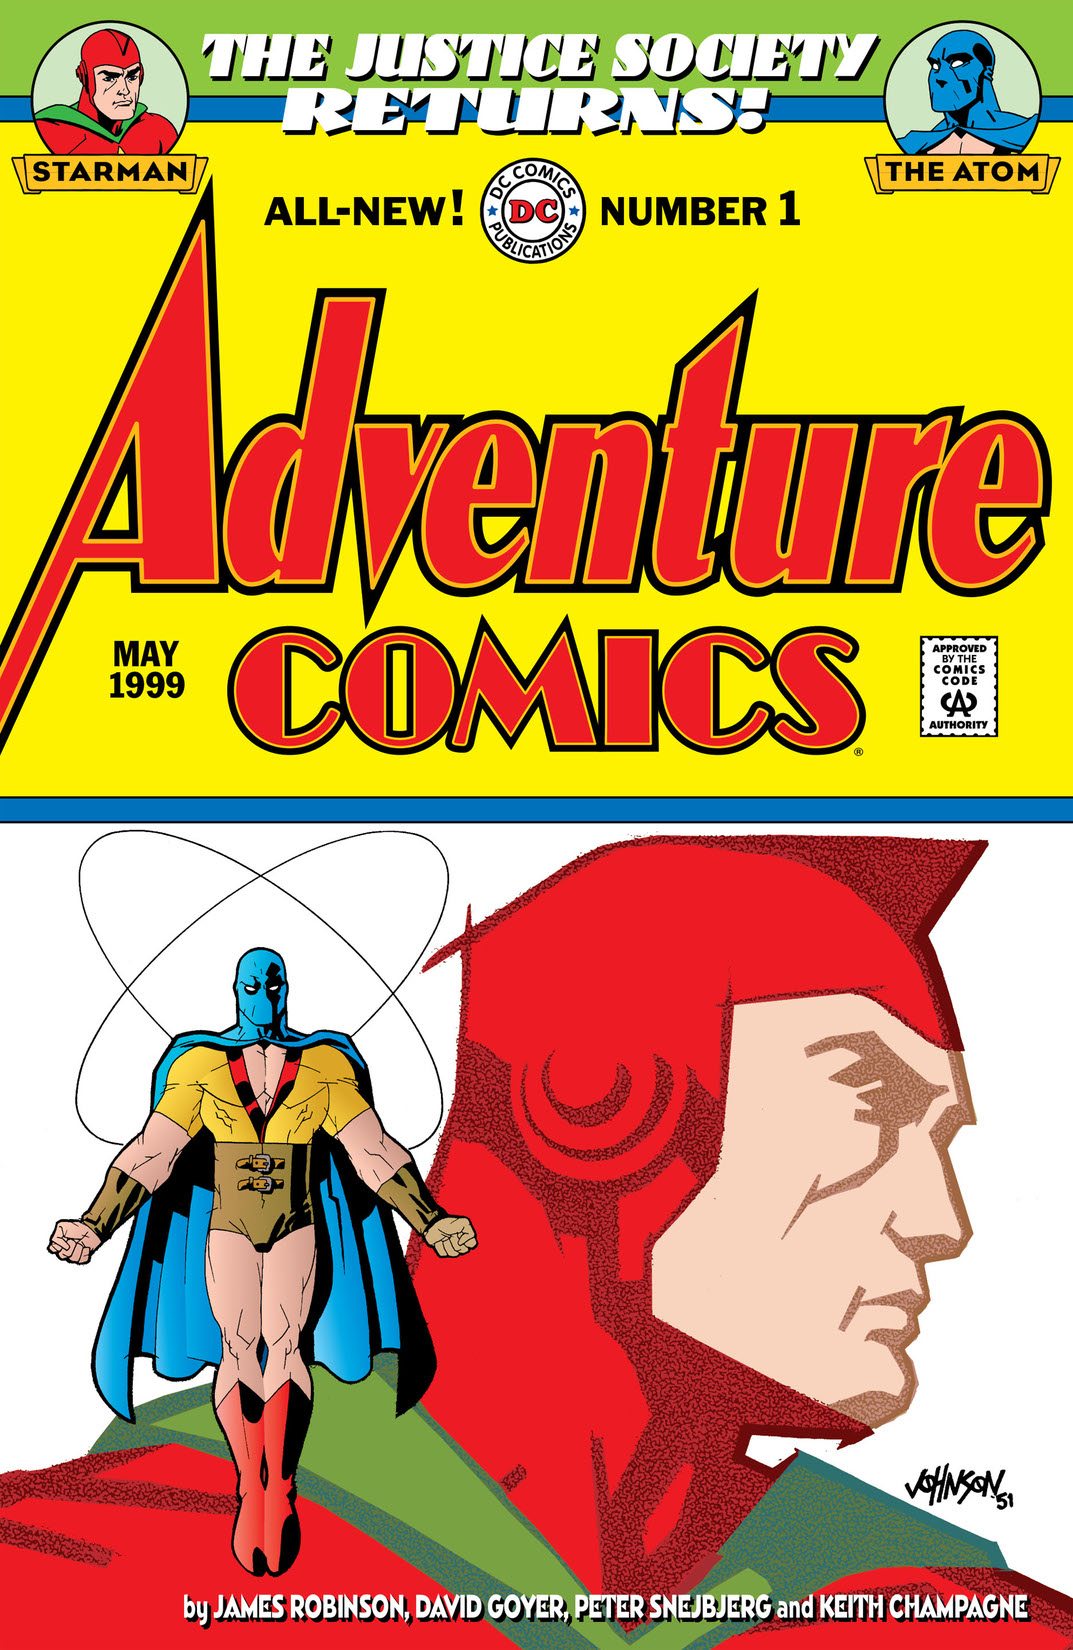 Adventure Comics #1 preview images